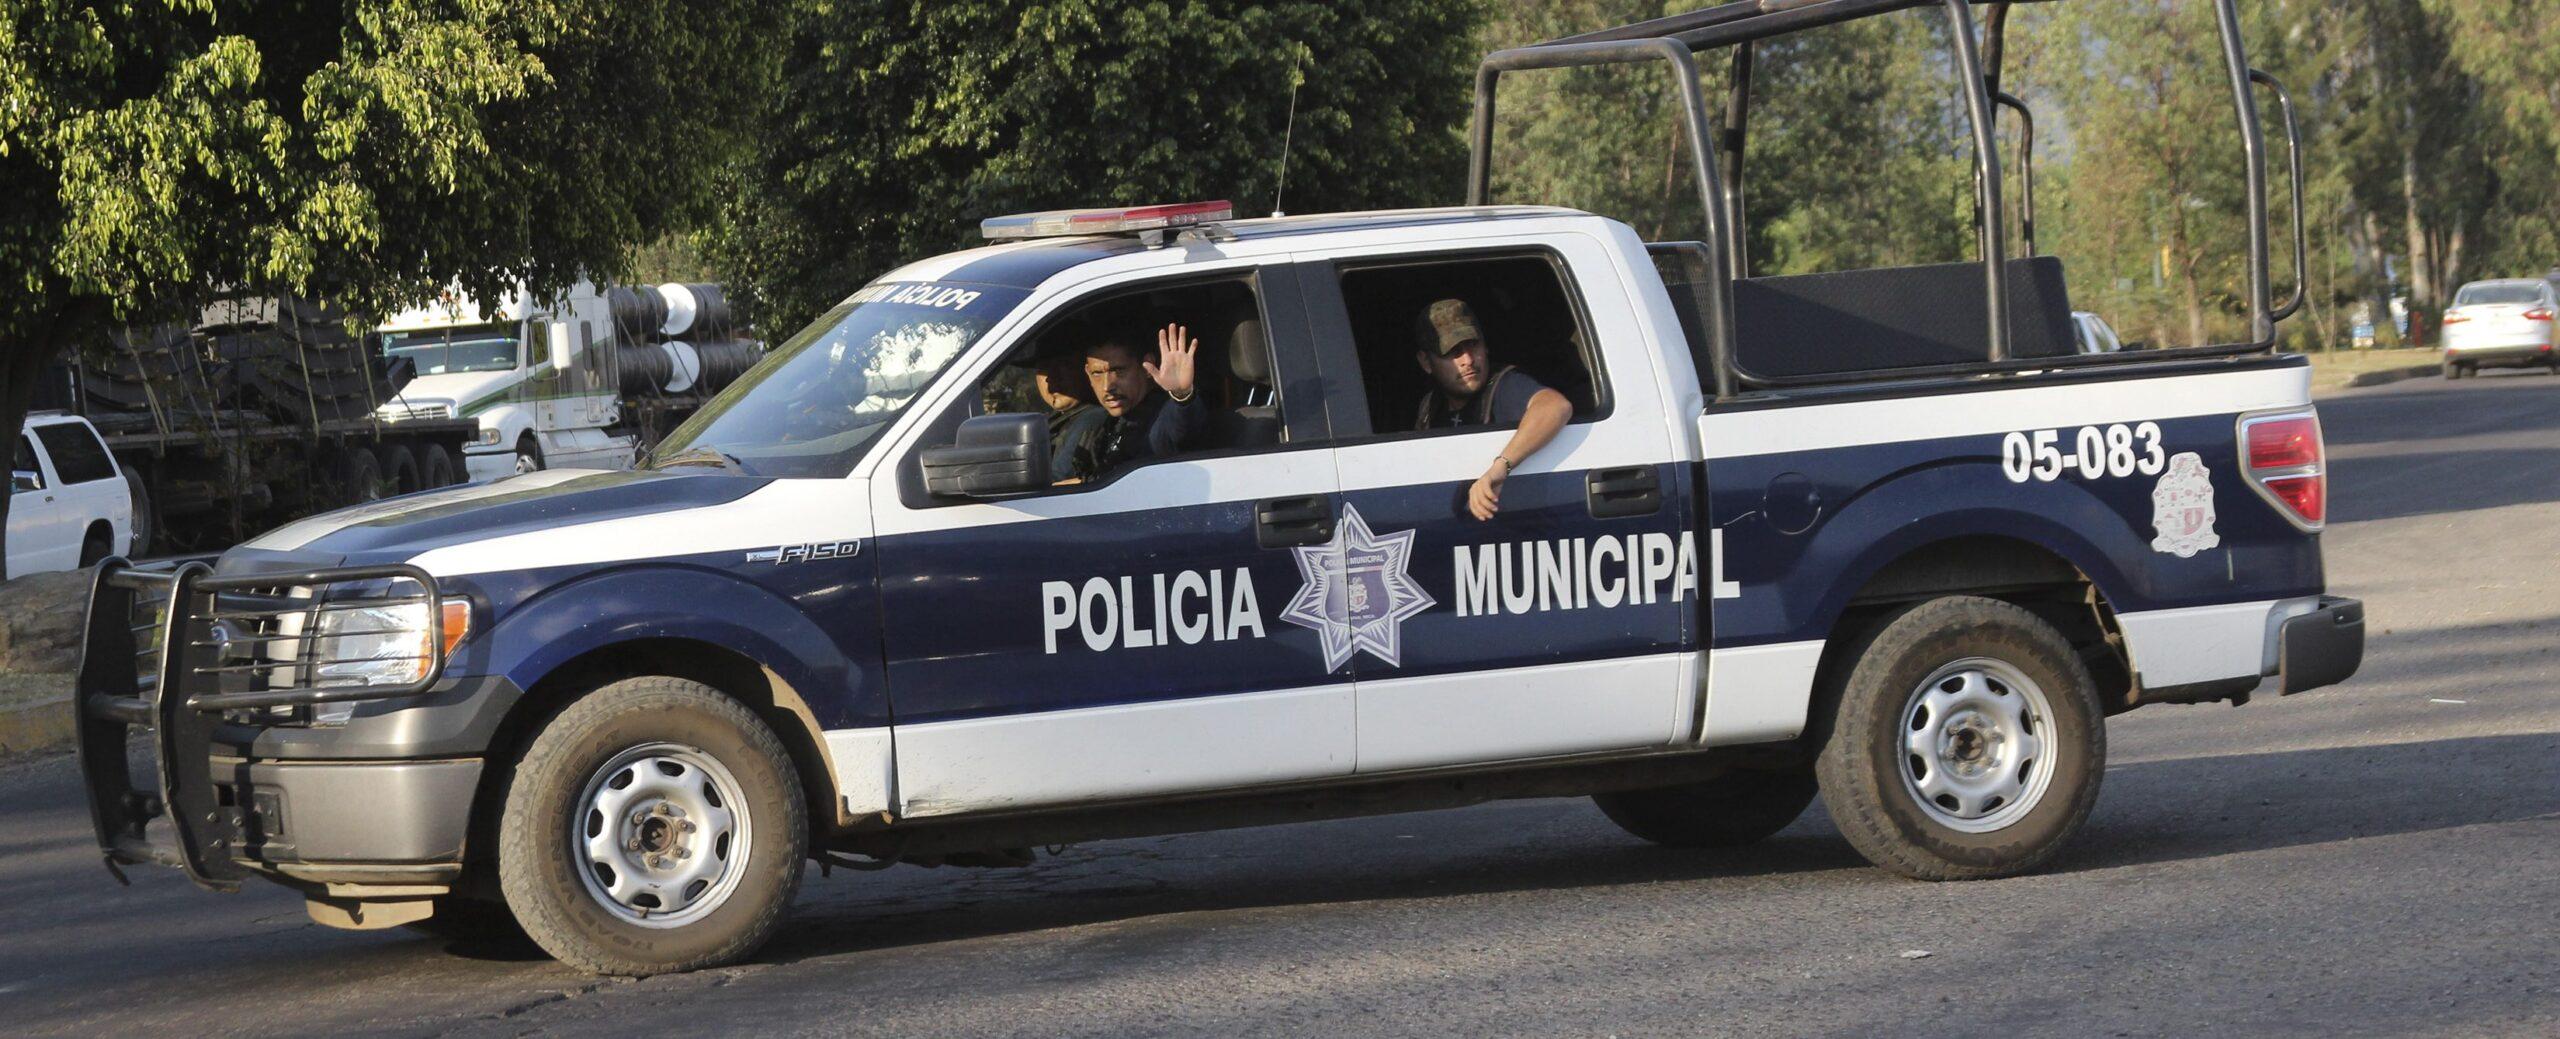 Hombres armados emboscan a policías en Michoacán; hay seis elementos heridos